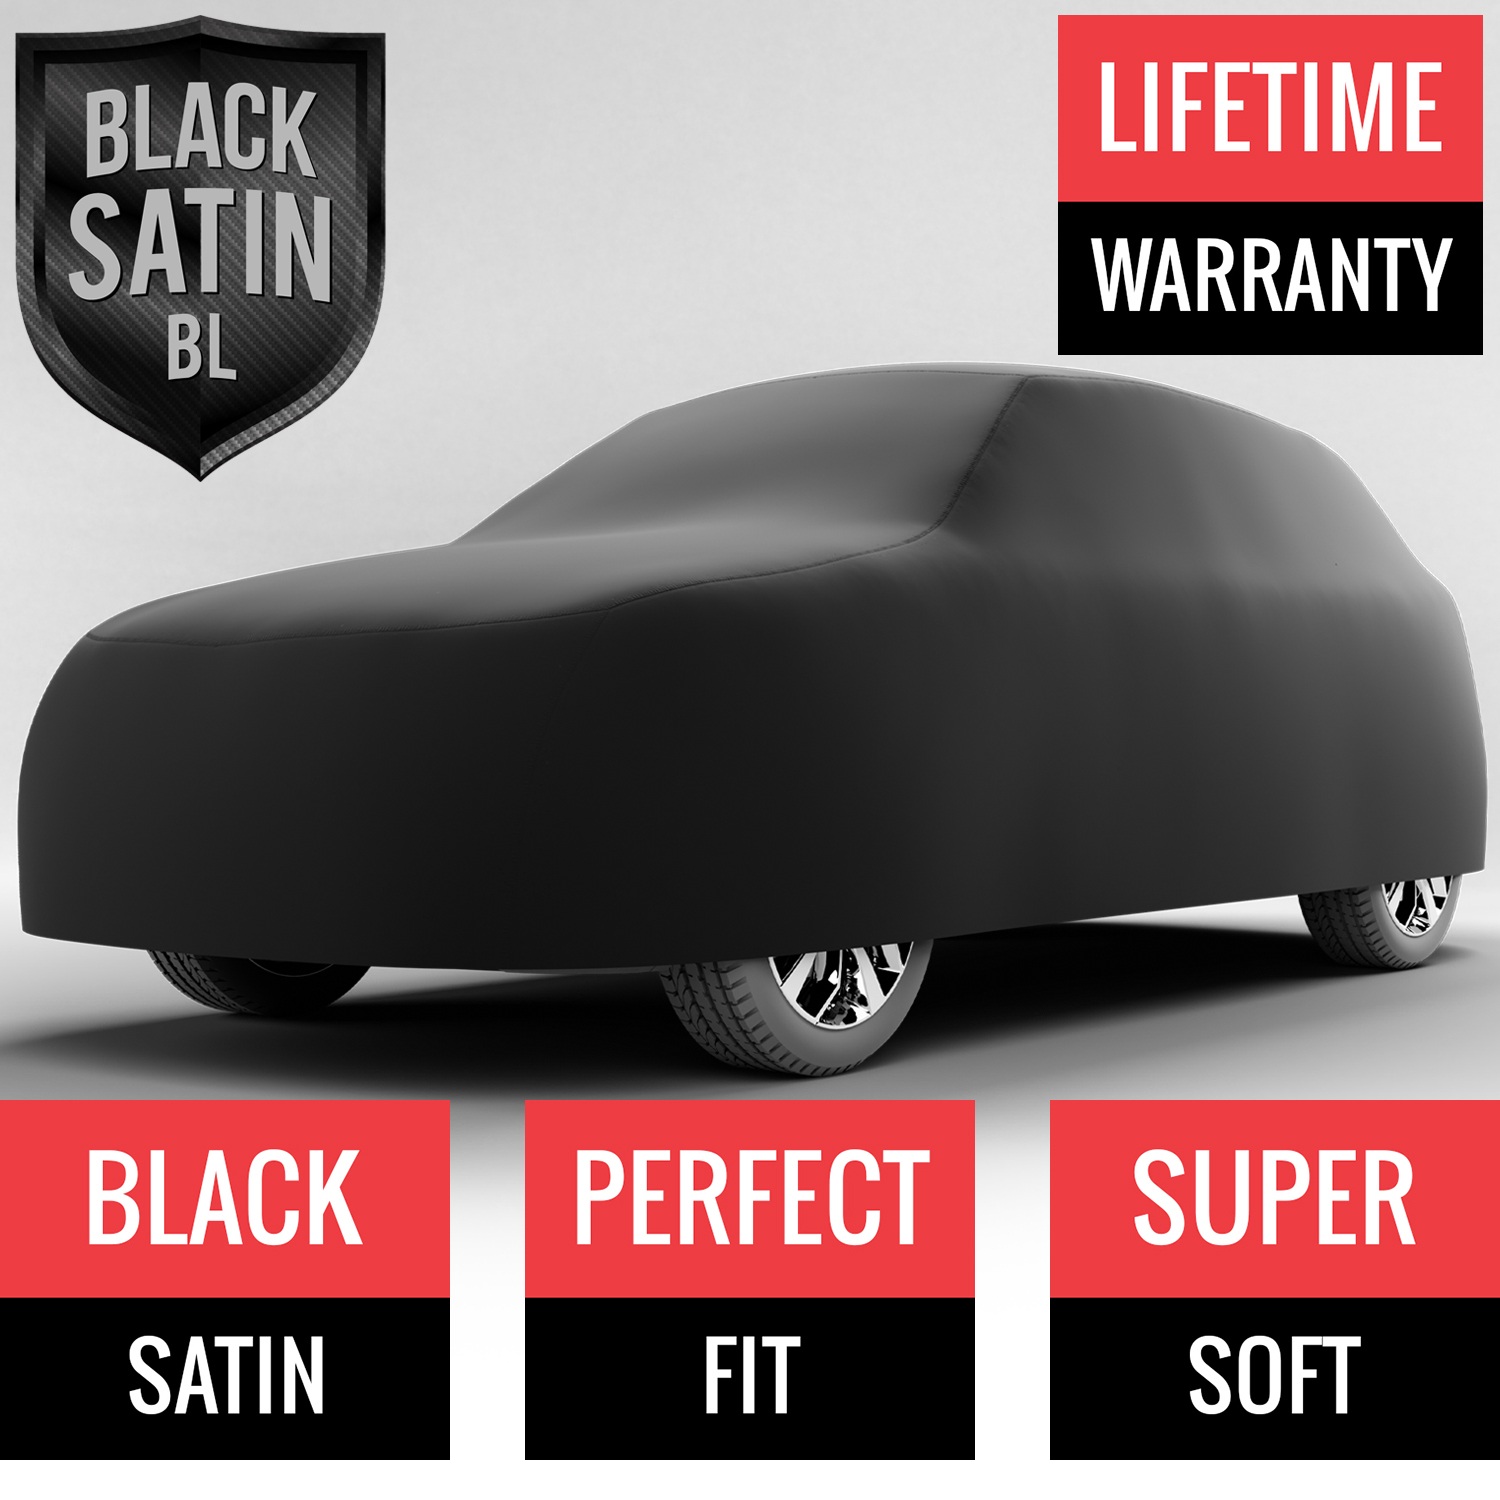 Black Satin BL - Black Car Cover for Plymouth Voyager 1992 Van